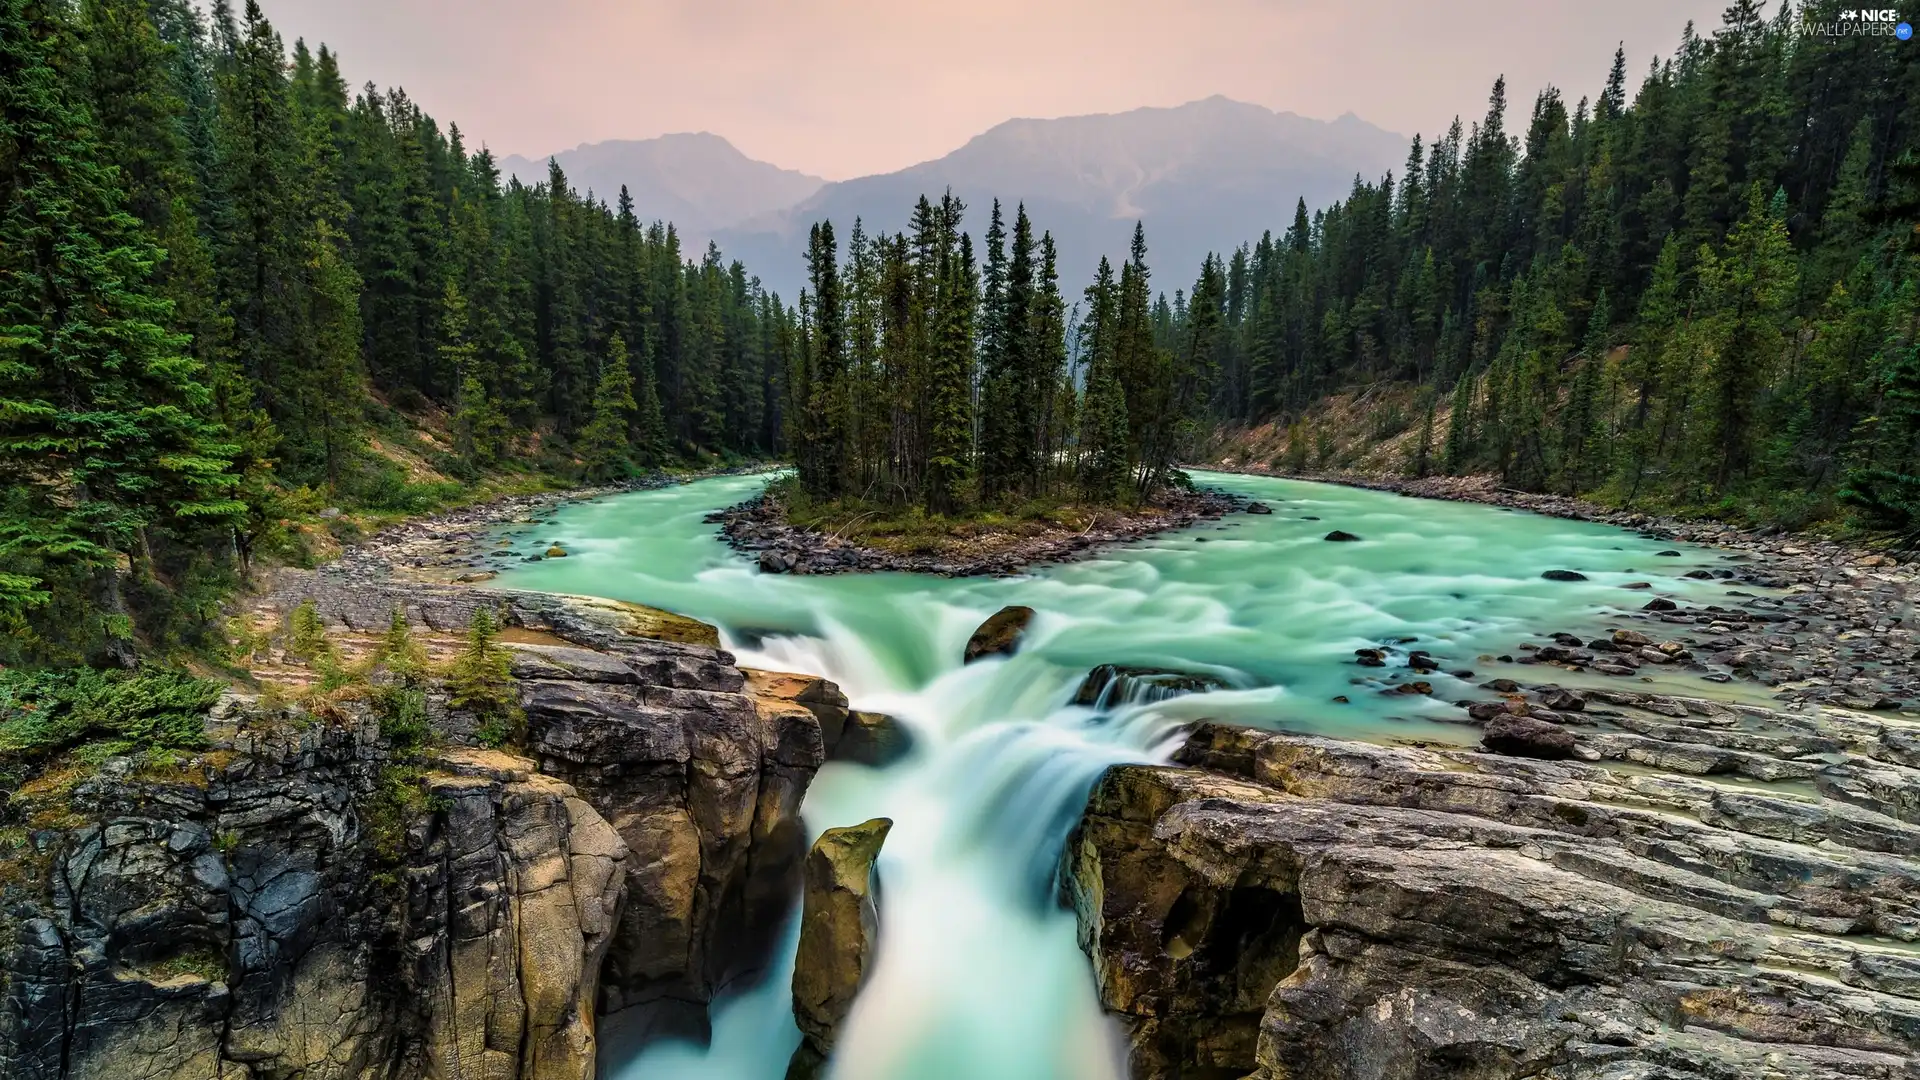 Sunwapta River, Sunwapta Waterfall, forest, trees, Alberta, Canada, Mountains, Jasper National Park, viewes